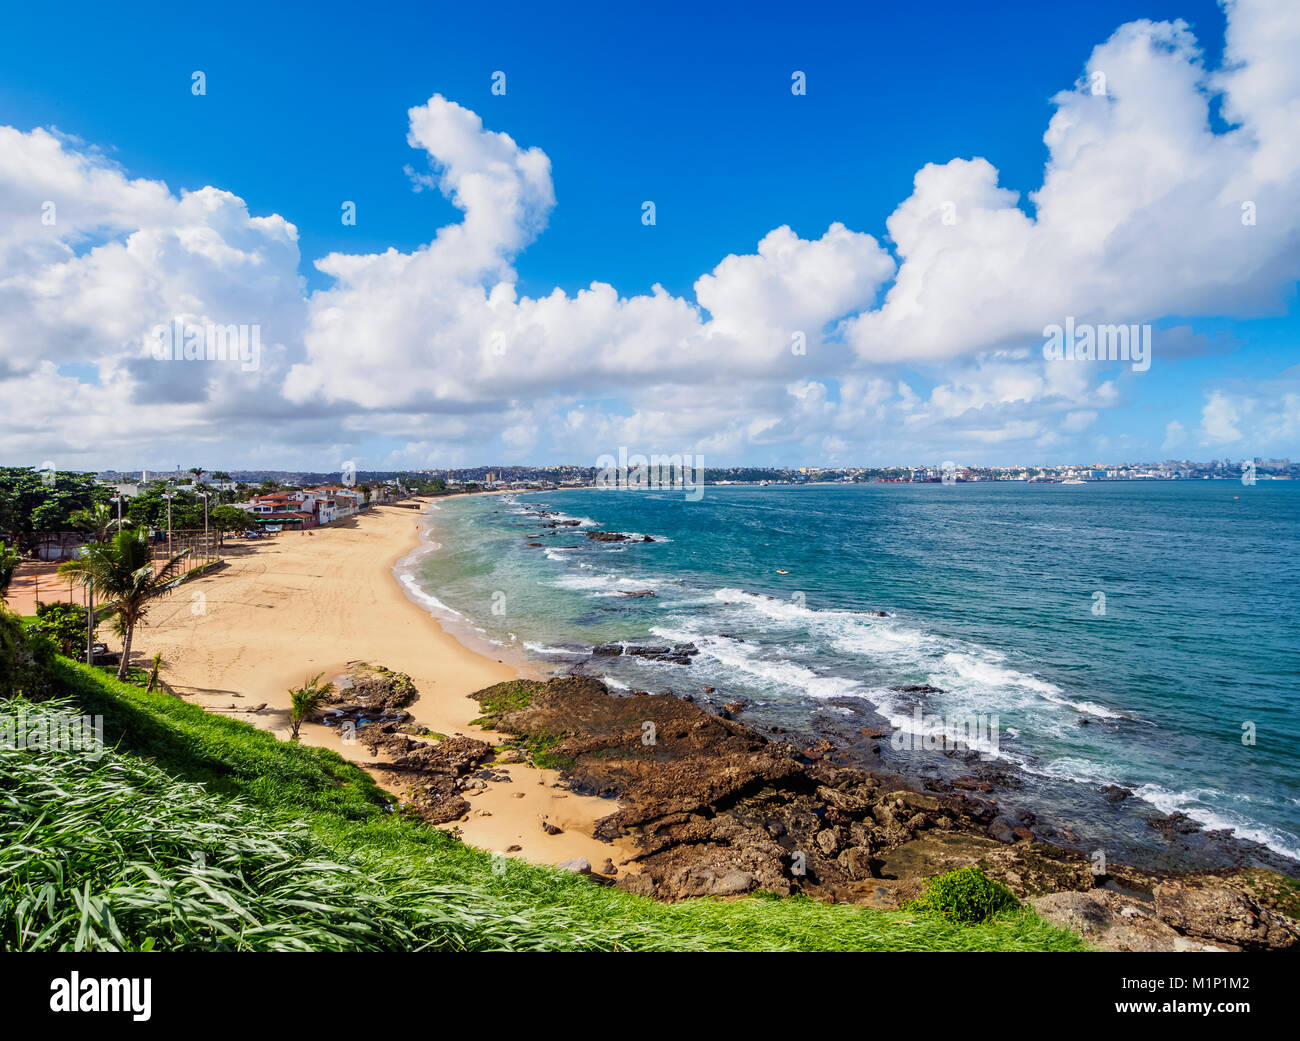 Boa Viagem Beach, elevated view, Salvador, State of Bahia, Brazil, South America Stock Photo